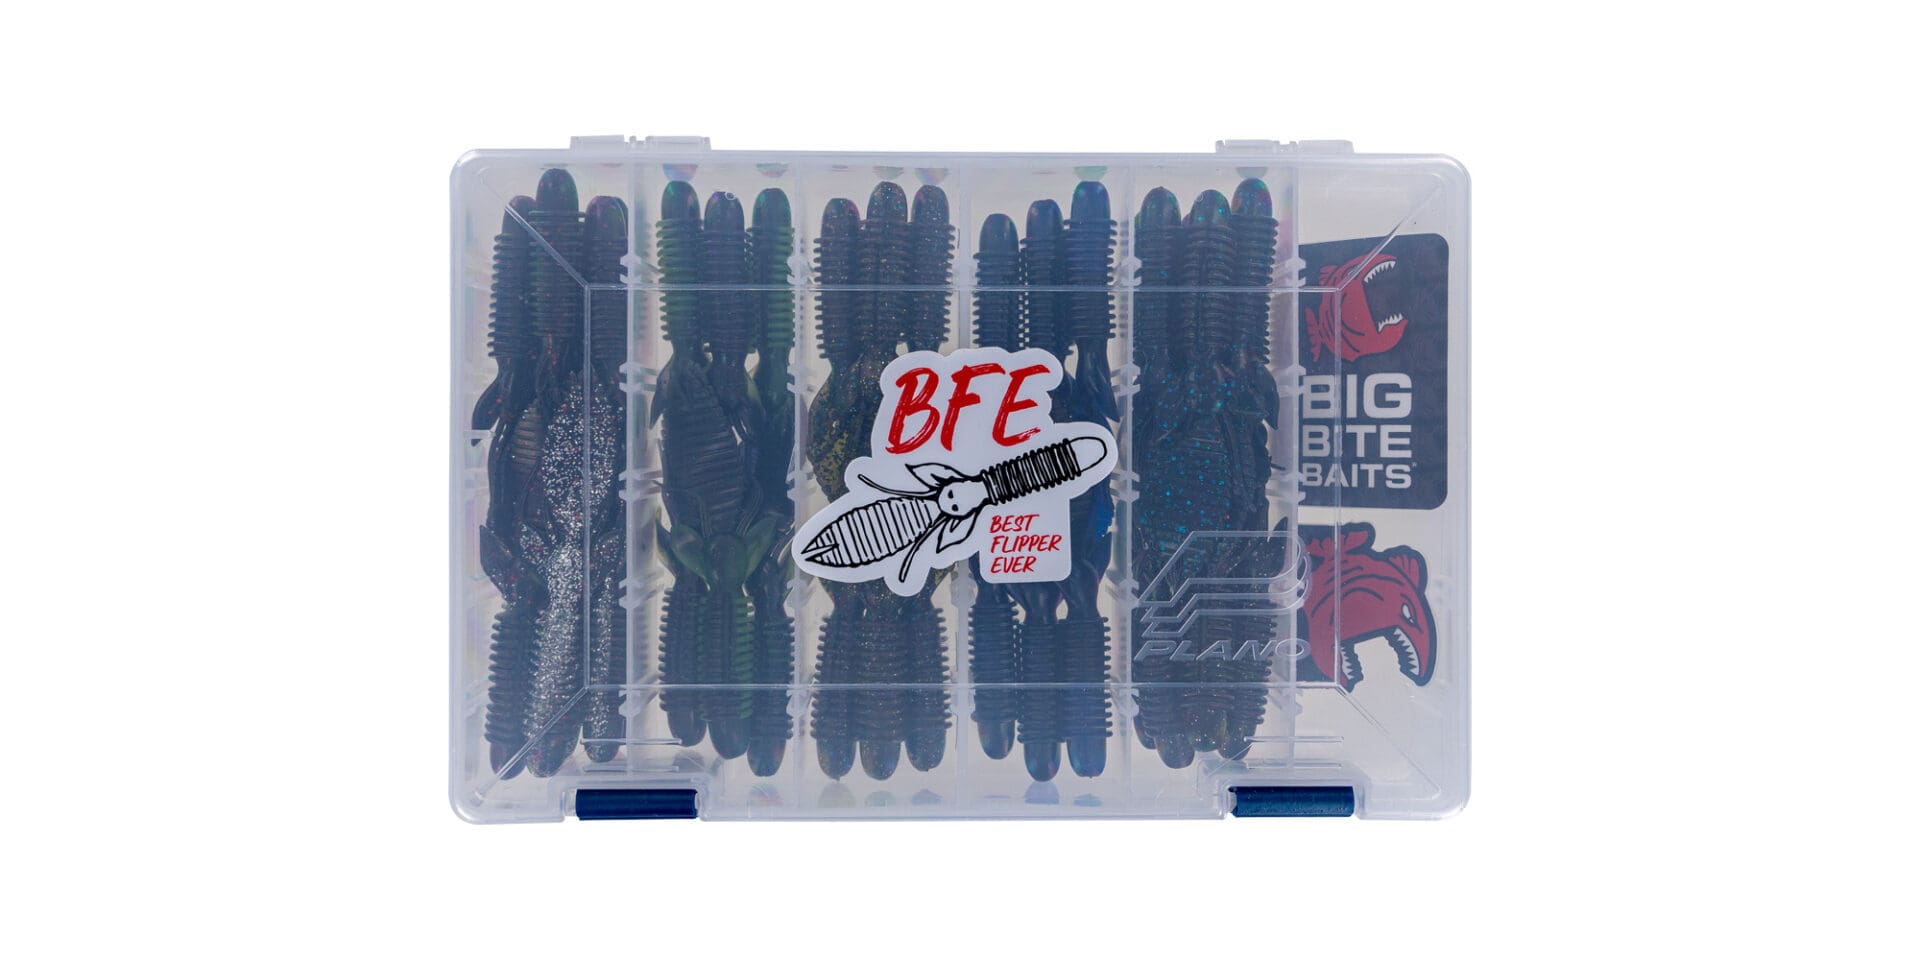 BFE Sticker - Big Bite Baits